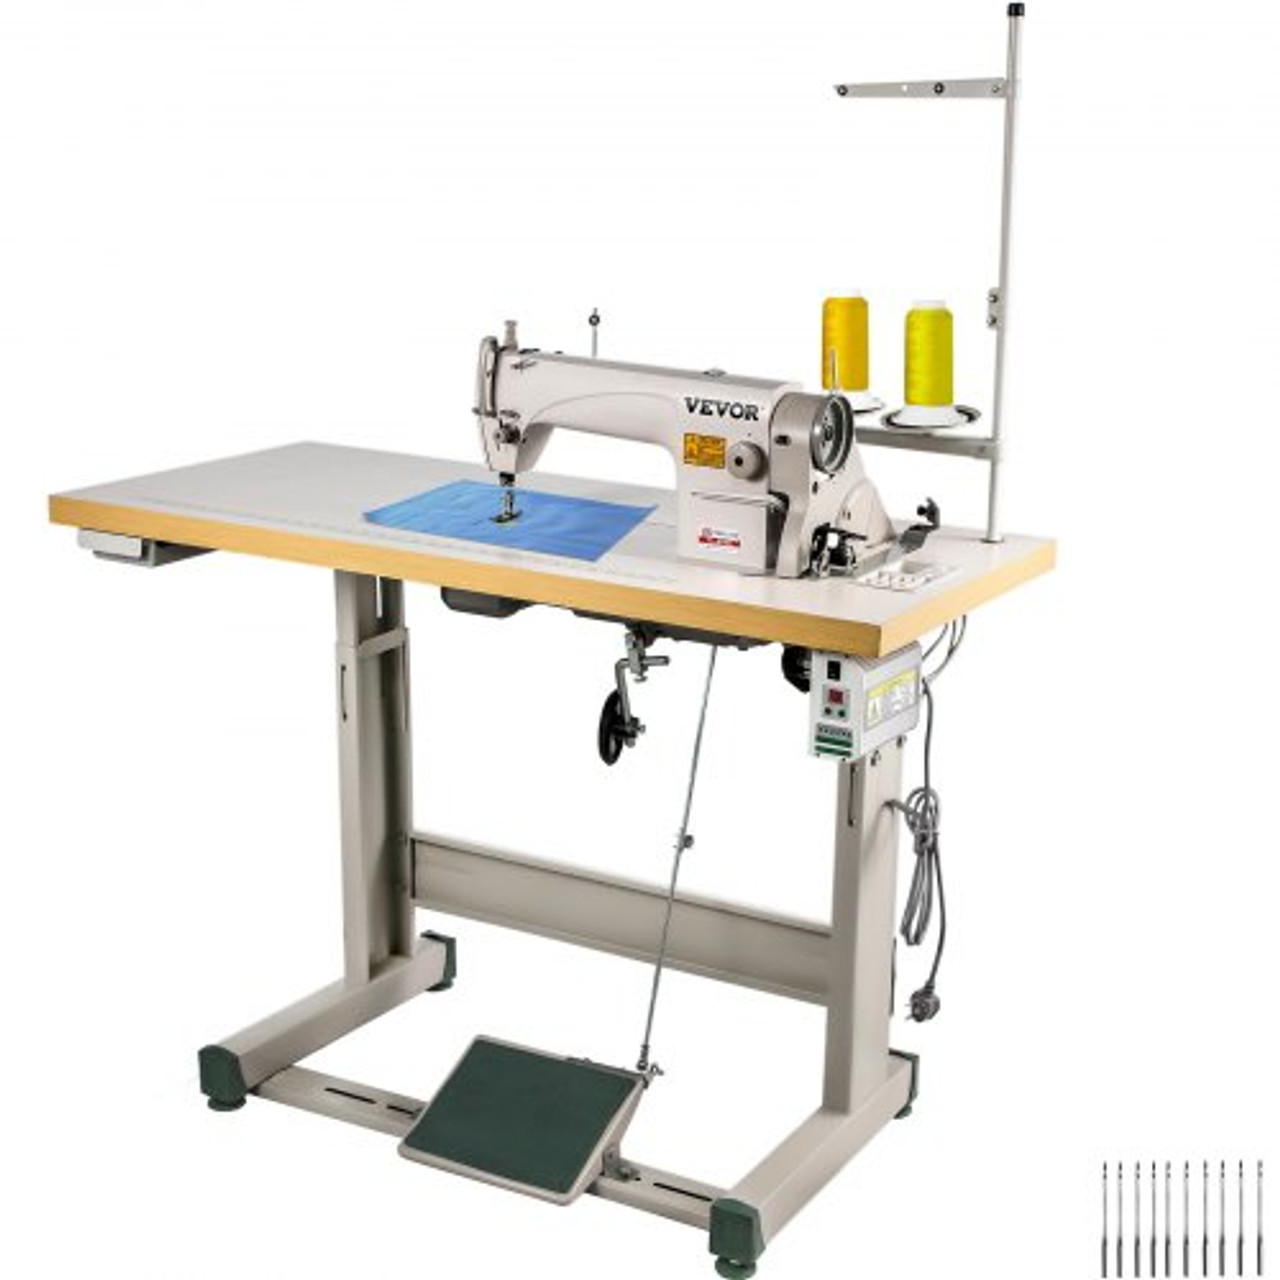 White 2037 Sewing Machine Parts Accessories Attachments